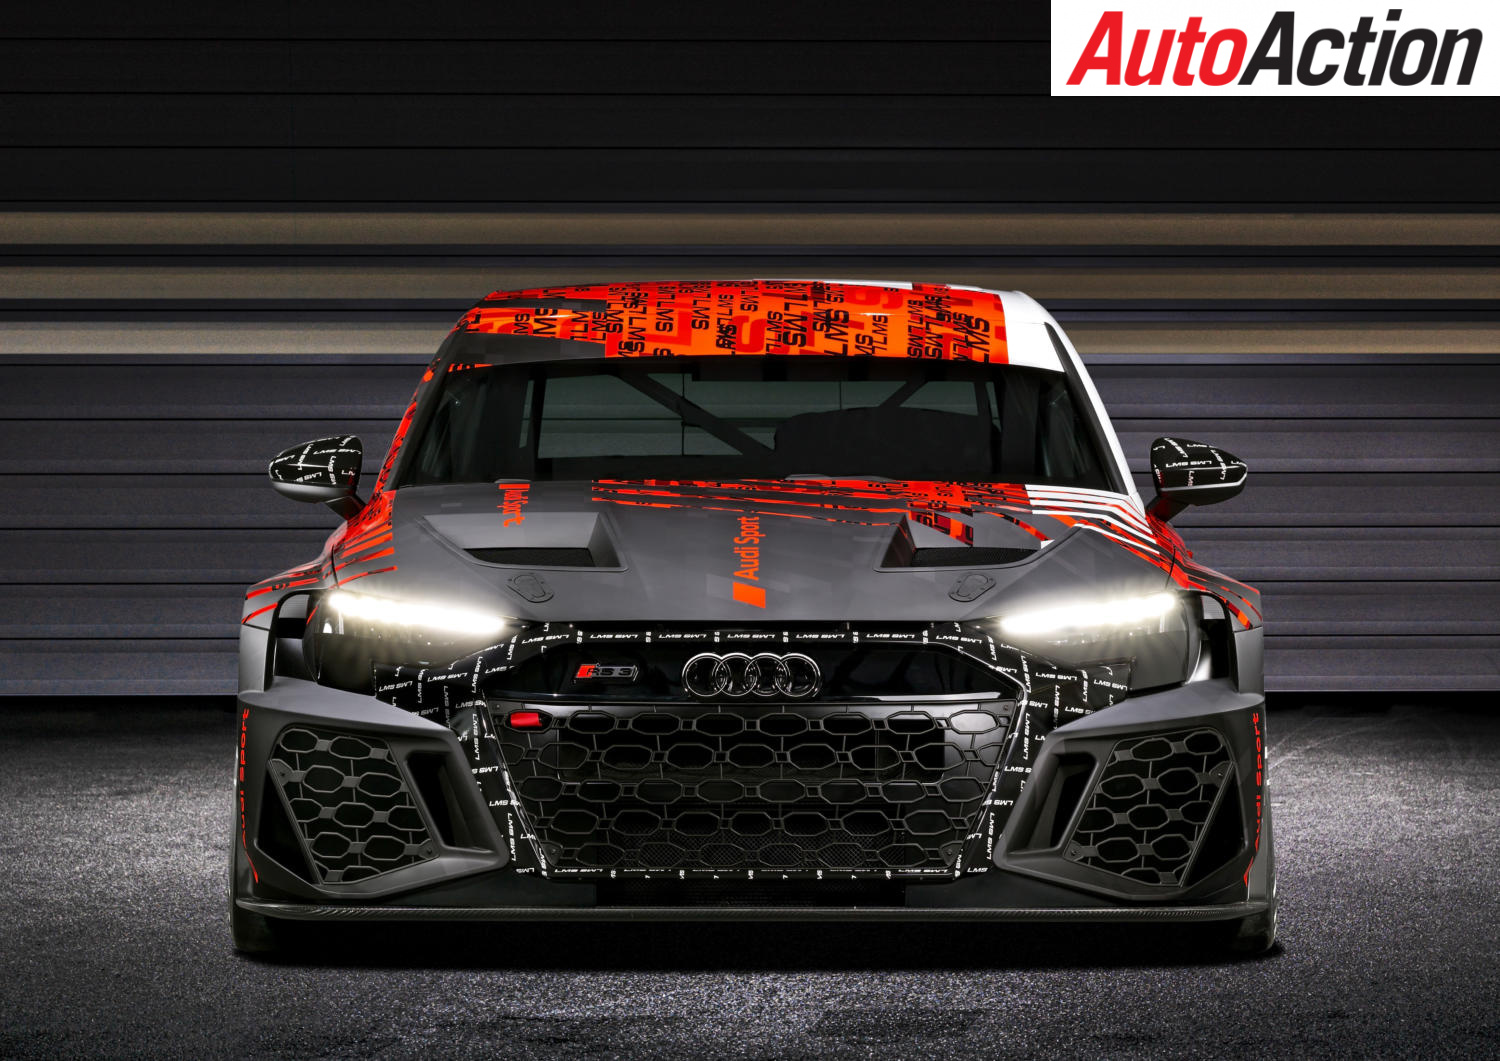 Audi reveal new TCR model - Images: Audi